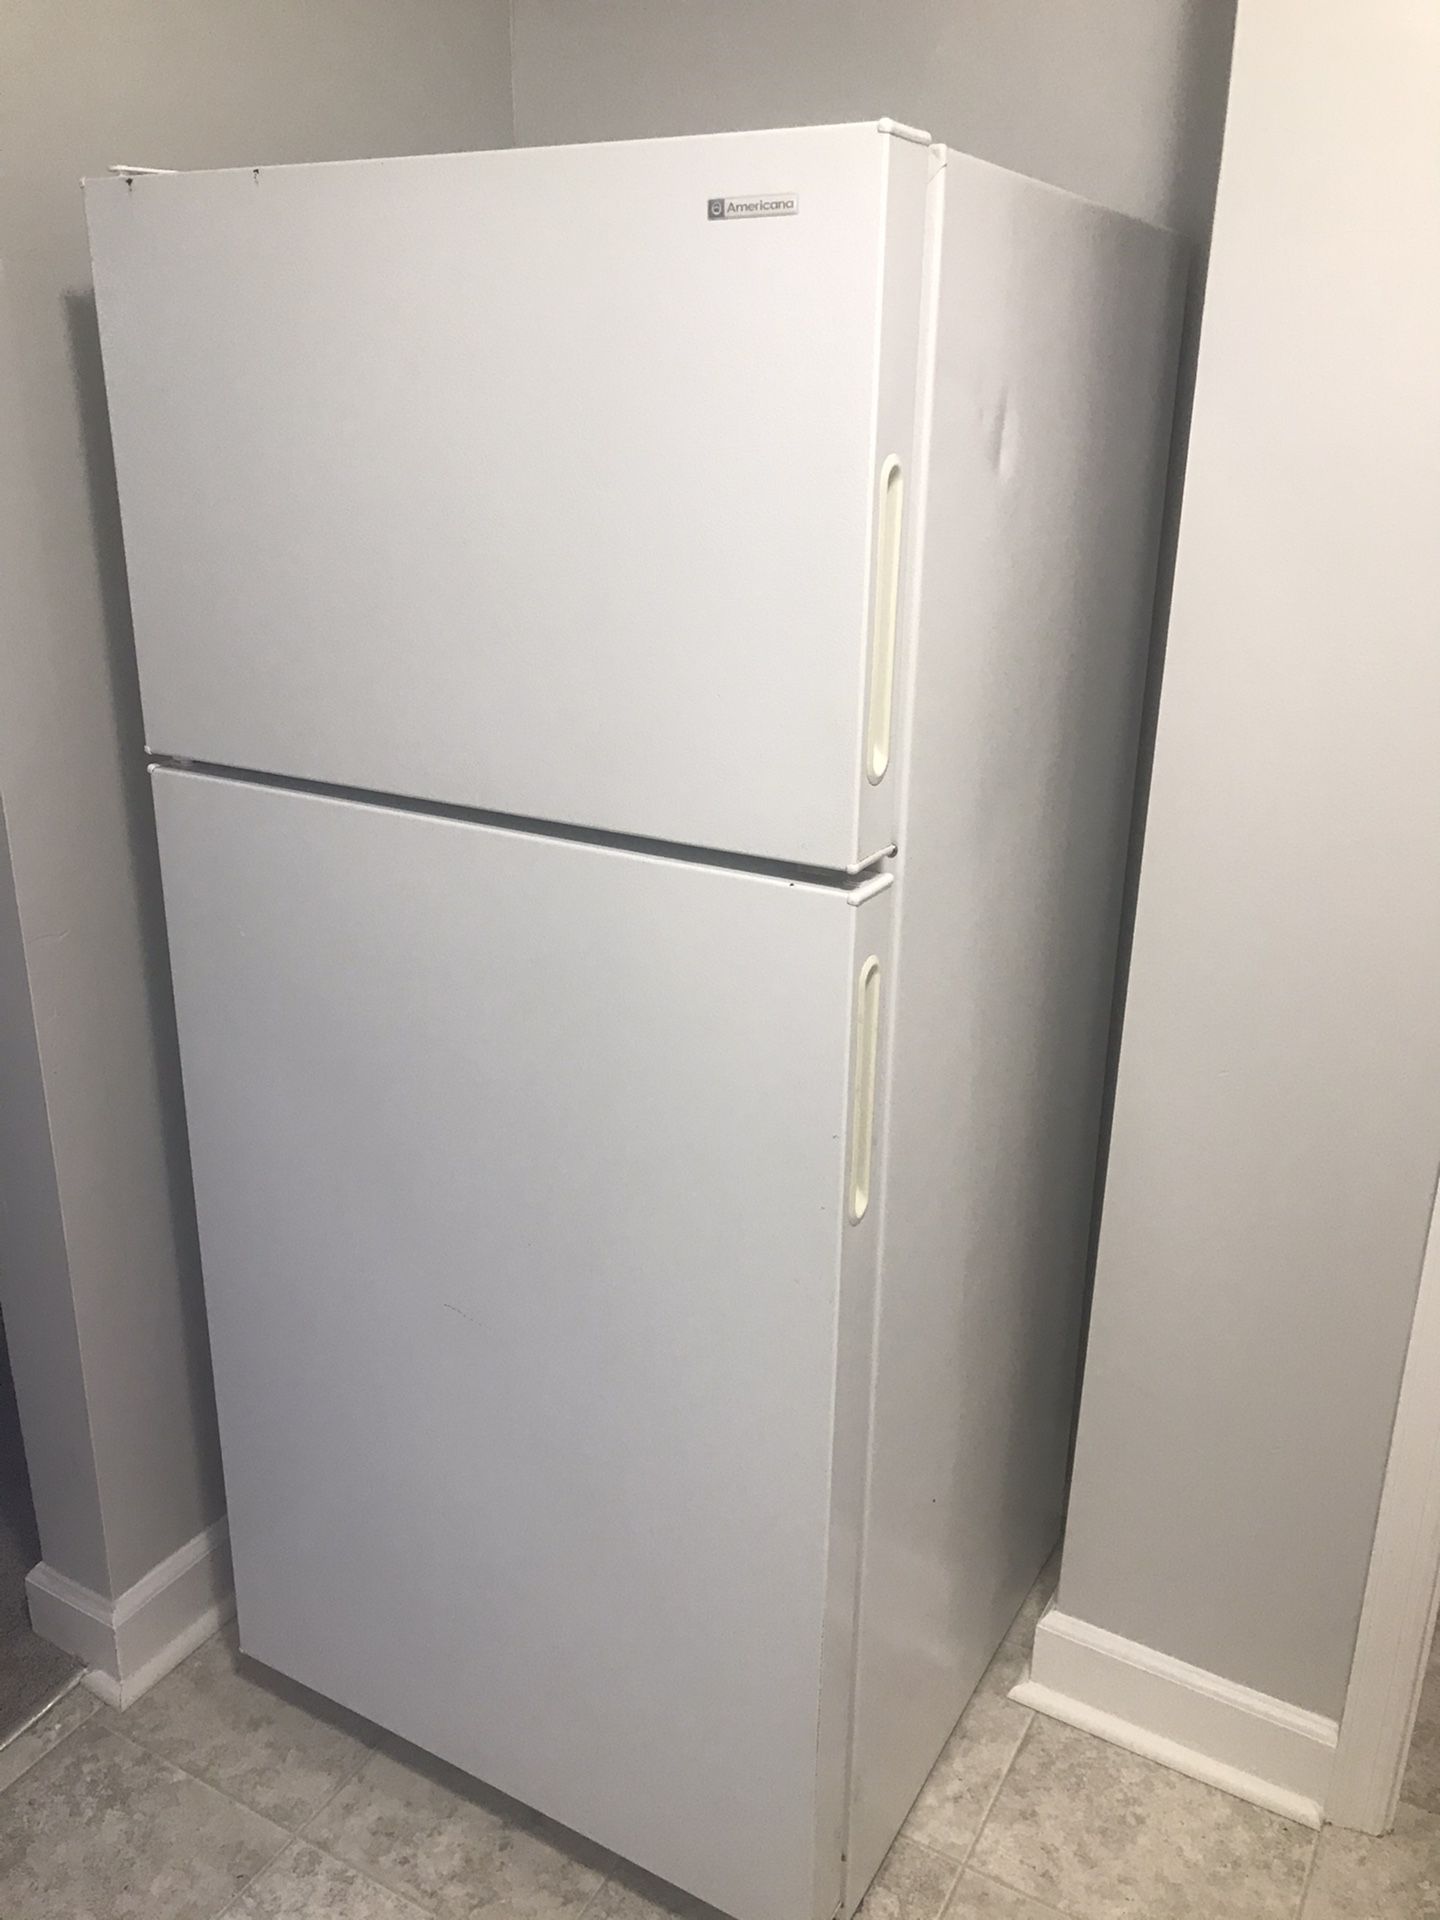 28 inch Americana Refrigerator